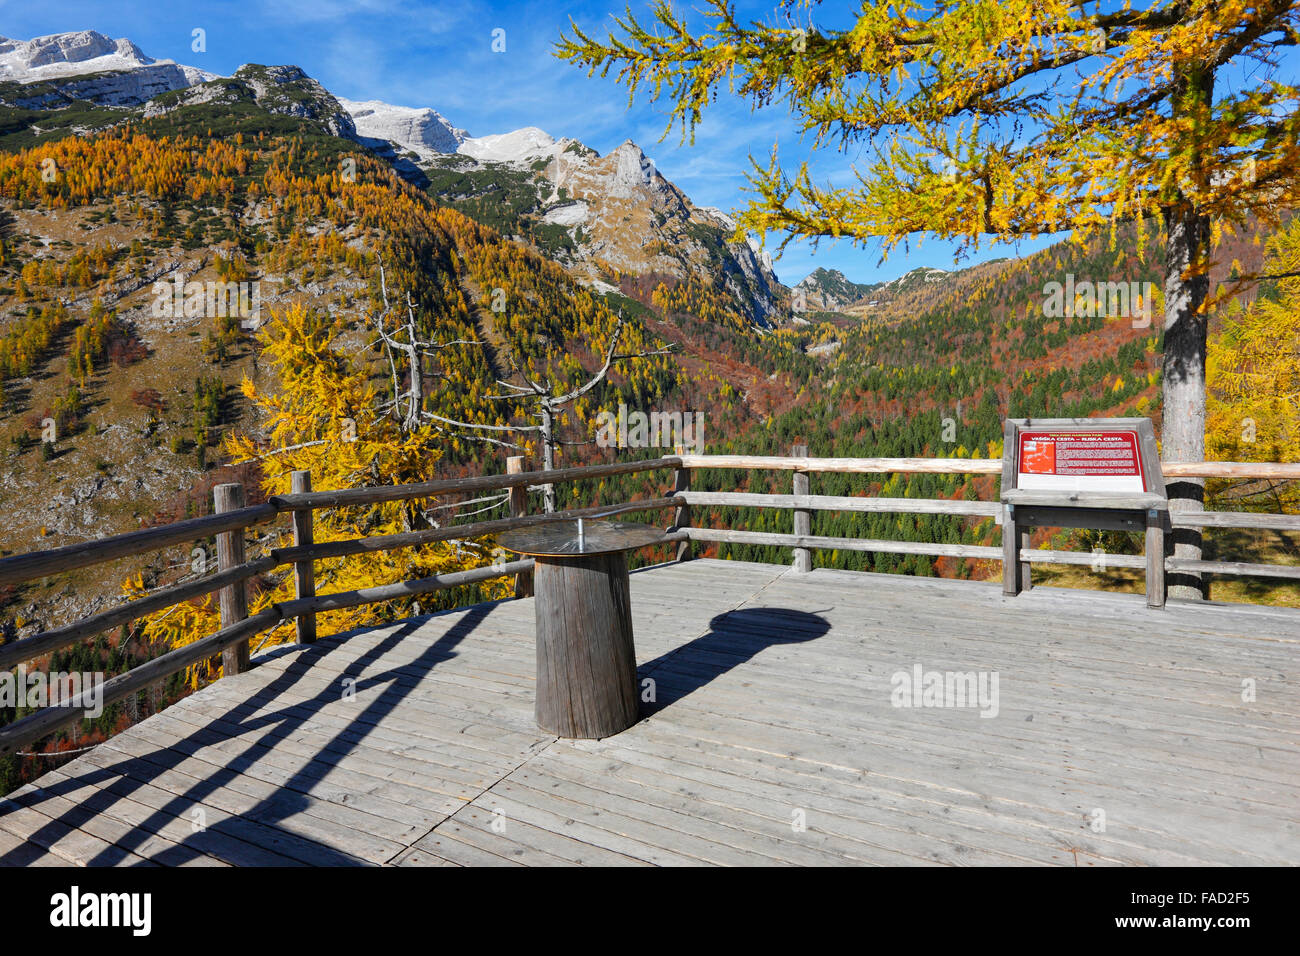 Viepiont vicino Vrsic pass nelle Alpi Giulie in autunno, Slovenia. Foto Stock